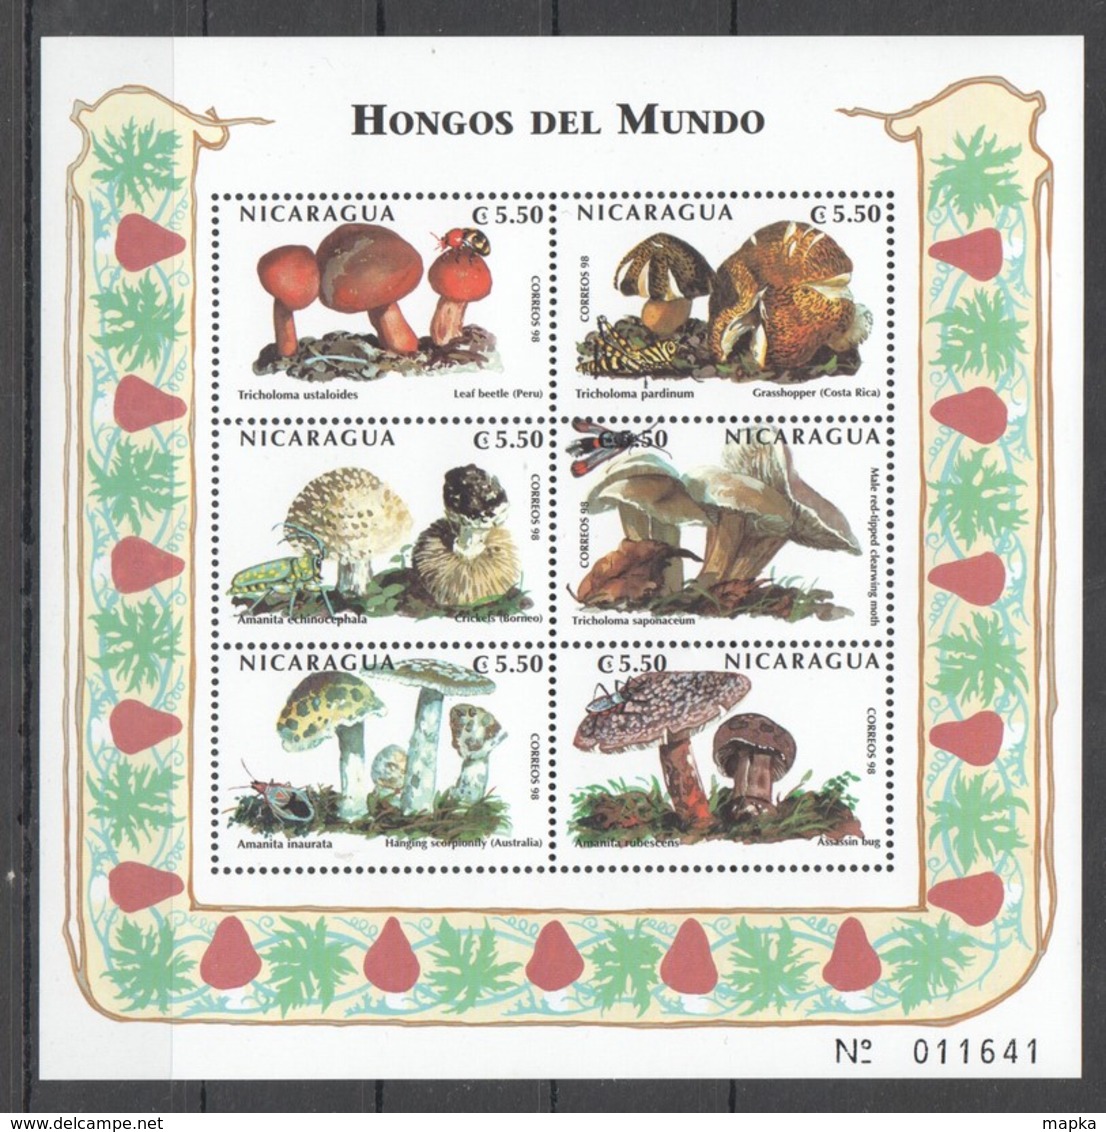 O1202 1998 NICARAGUA FLORA NATURE MUSHROOMS HONGOS DEL MUNDO 1KB MNH - Mushrooms